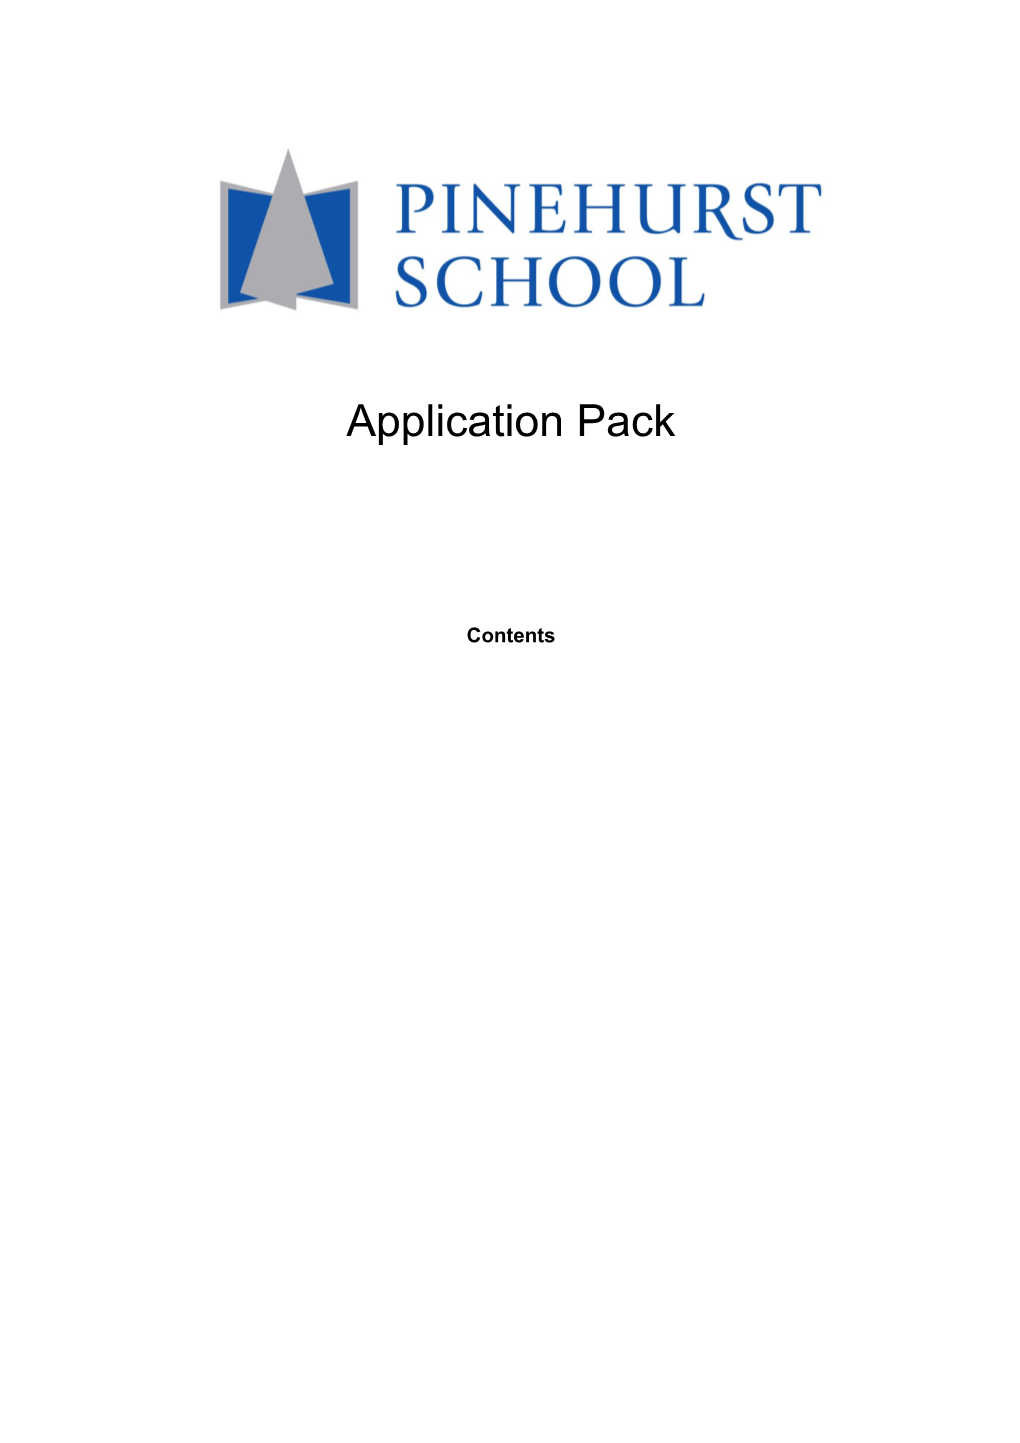 Pinehurst School Application and Information Pack